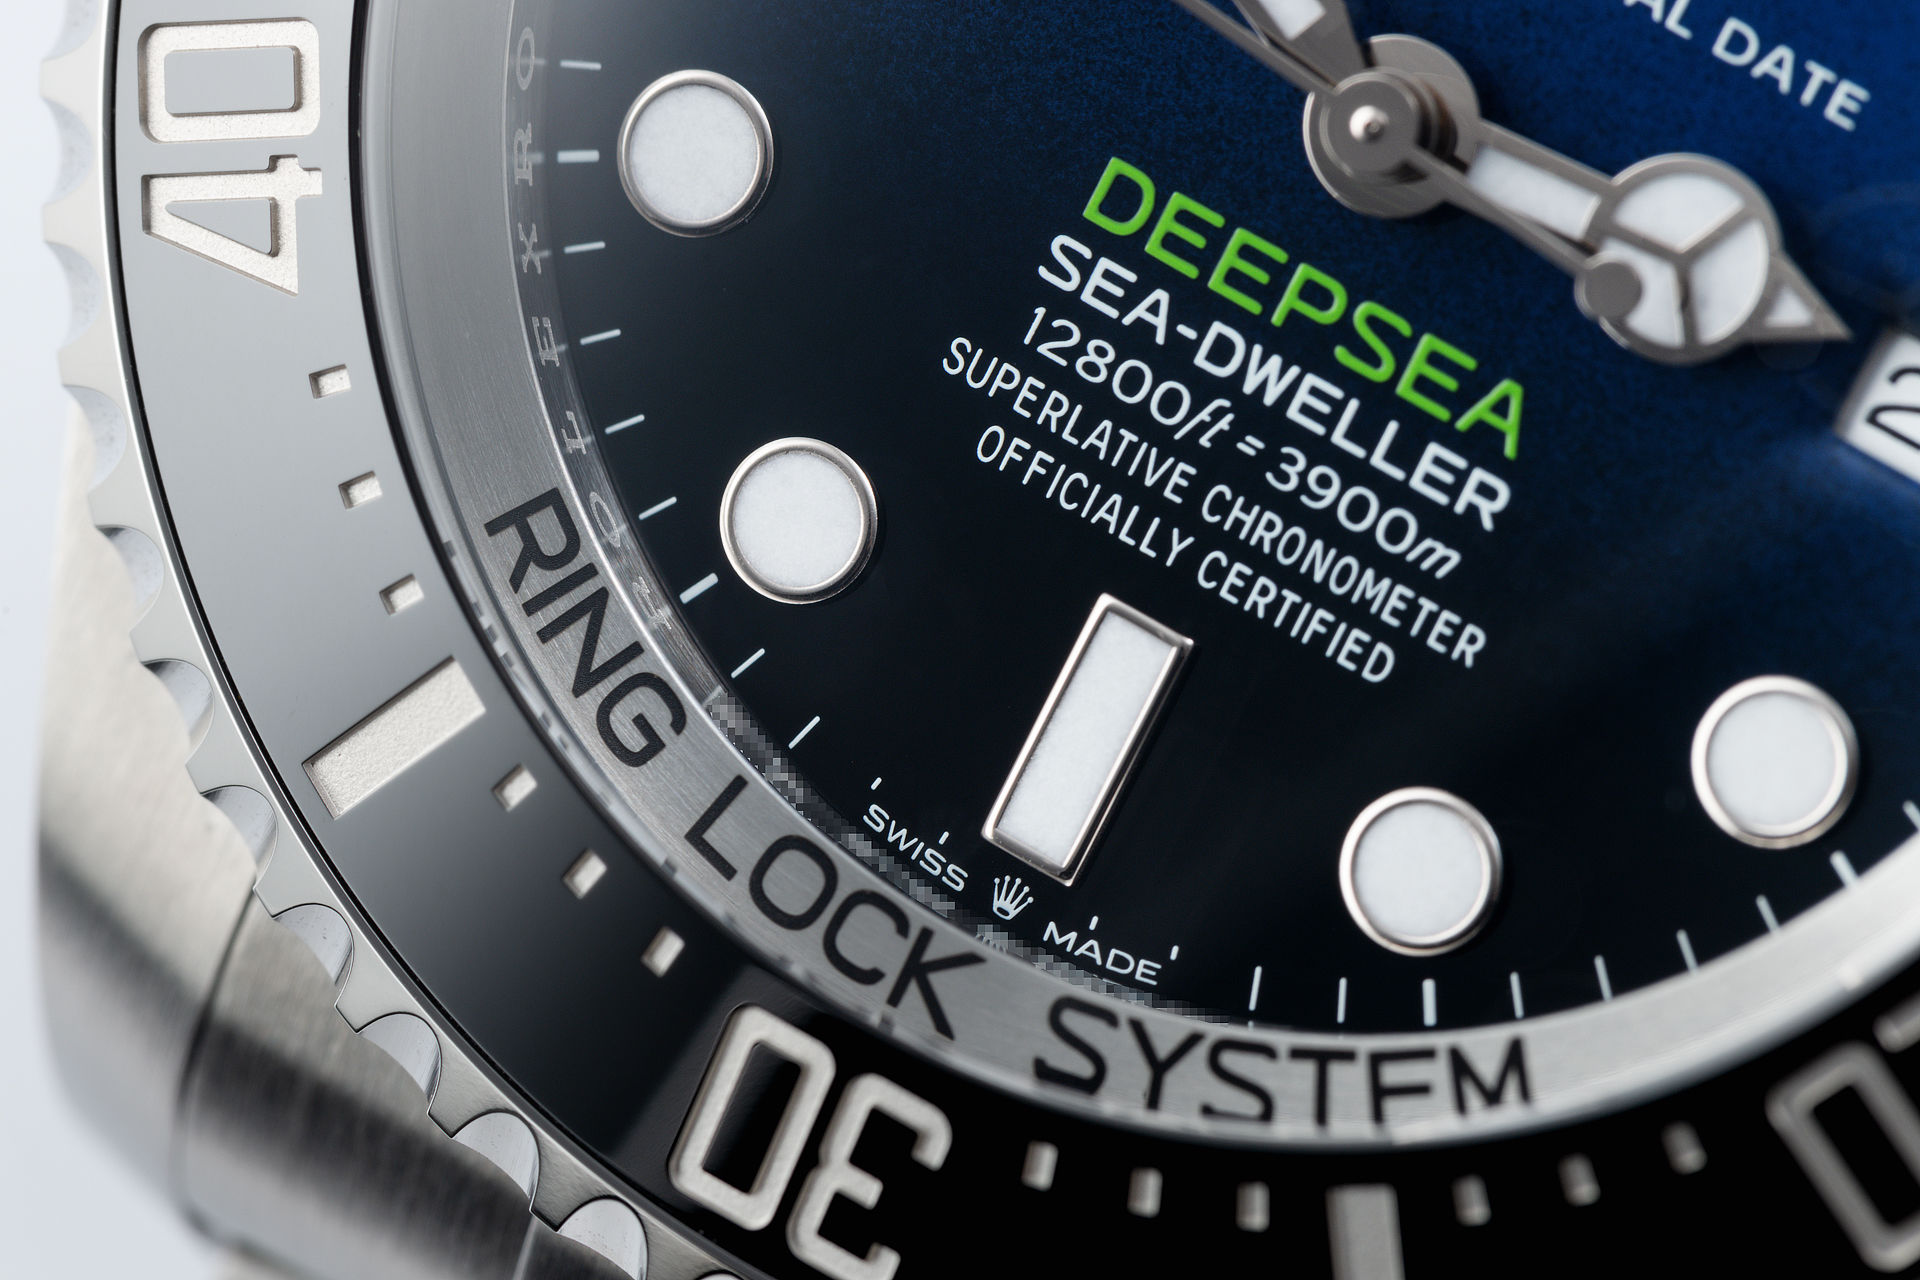 James Cameron "3235" Calibre | ref 126660 | Rolex Deepsea D-Blue